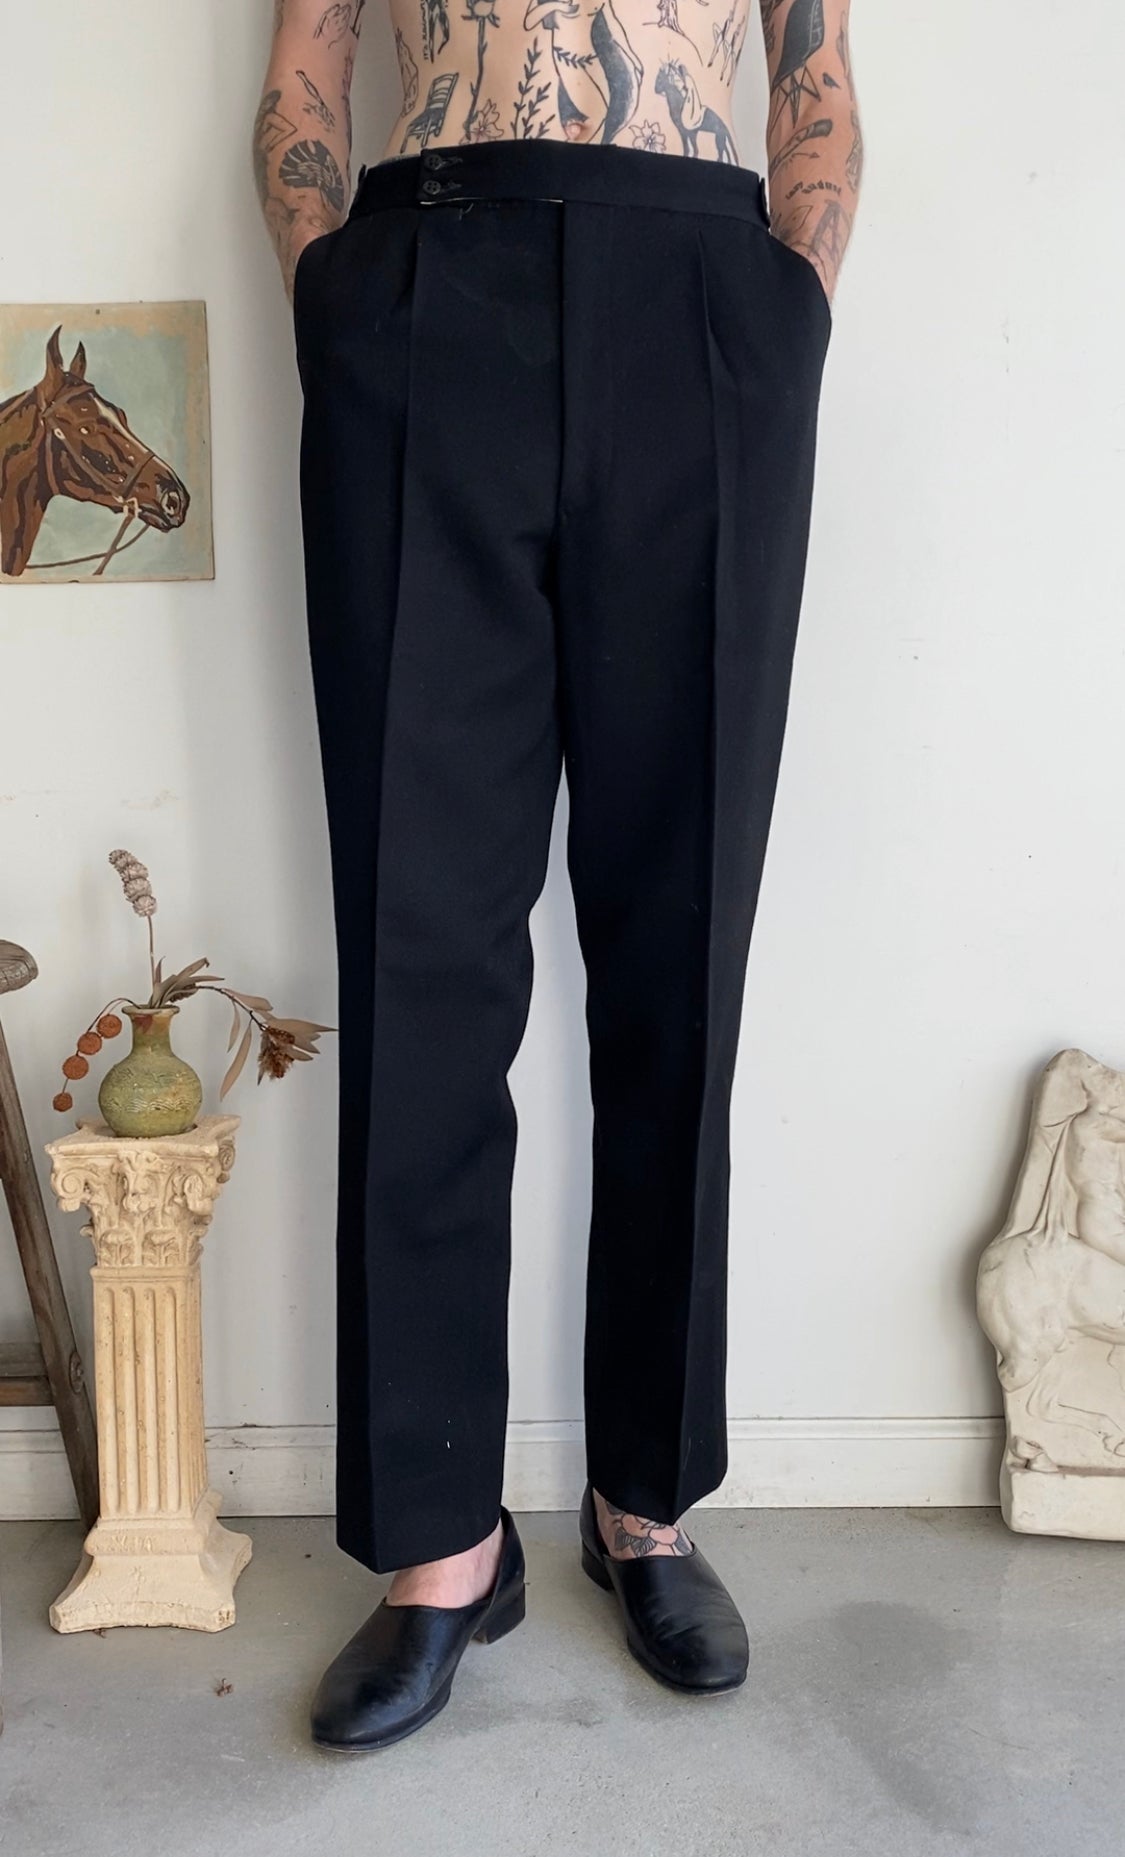 1970s Tuxedo Trousers (31 x 32)